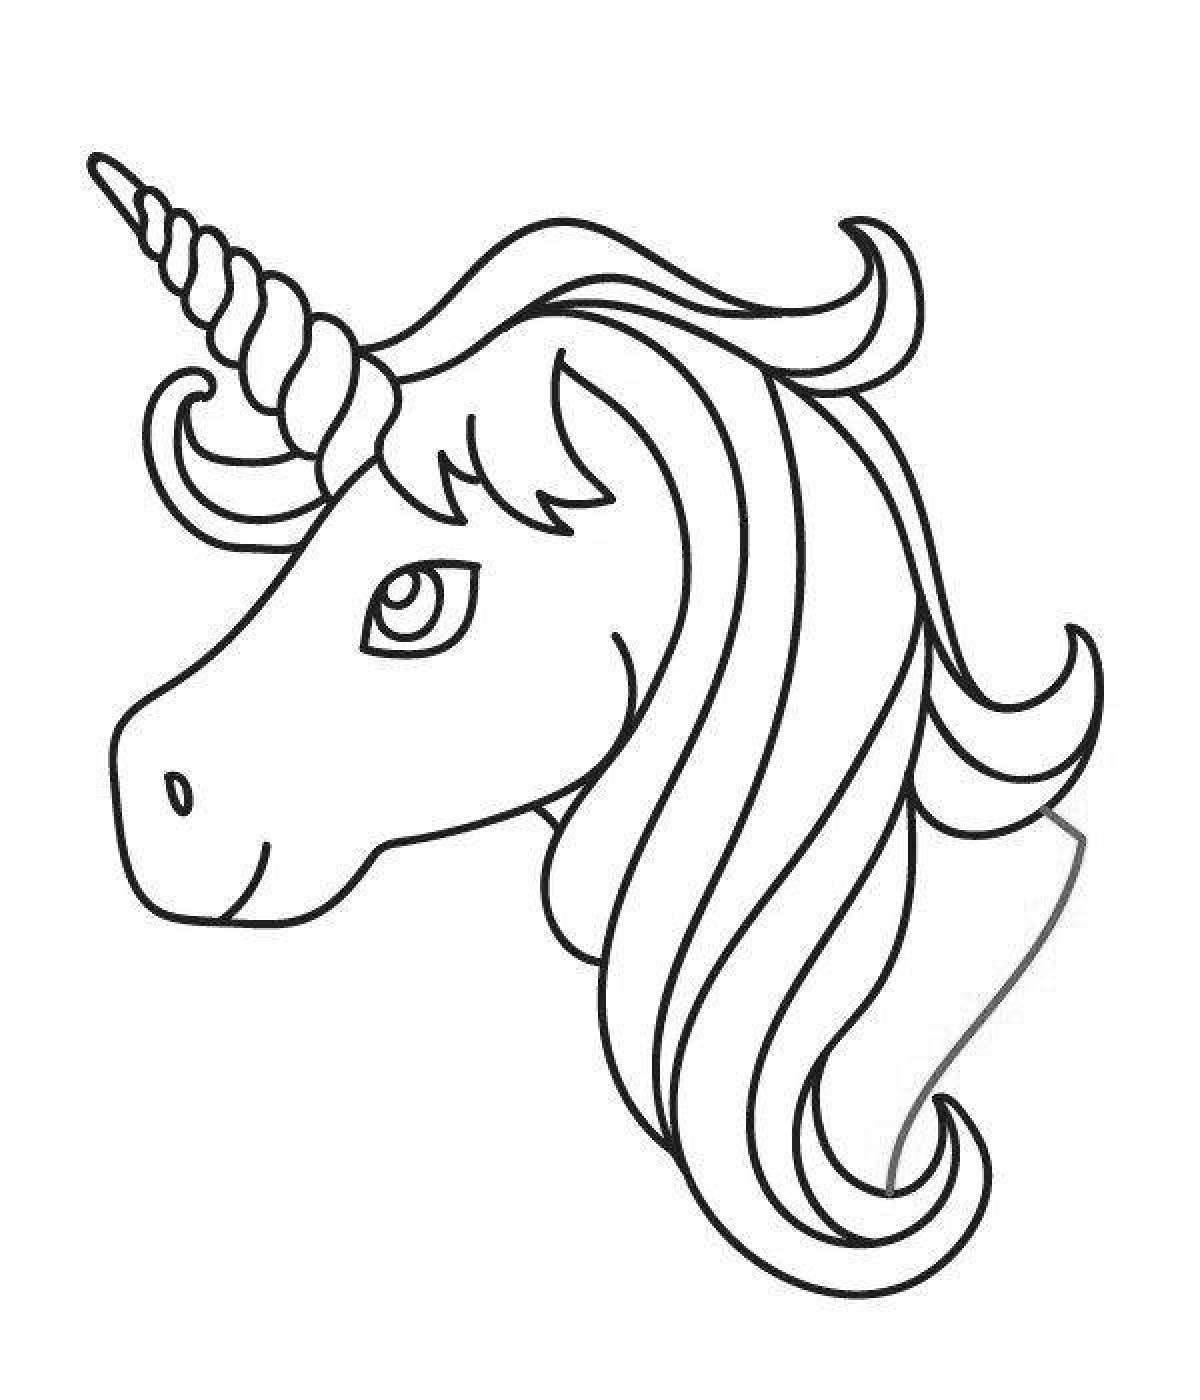 Shiny unicorn head coloring book